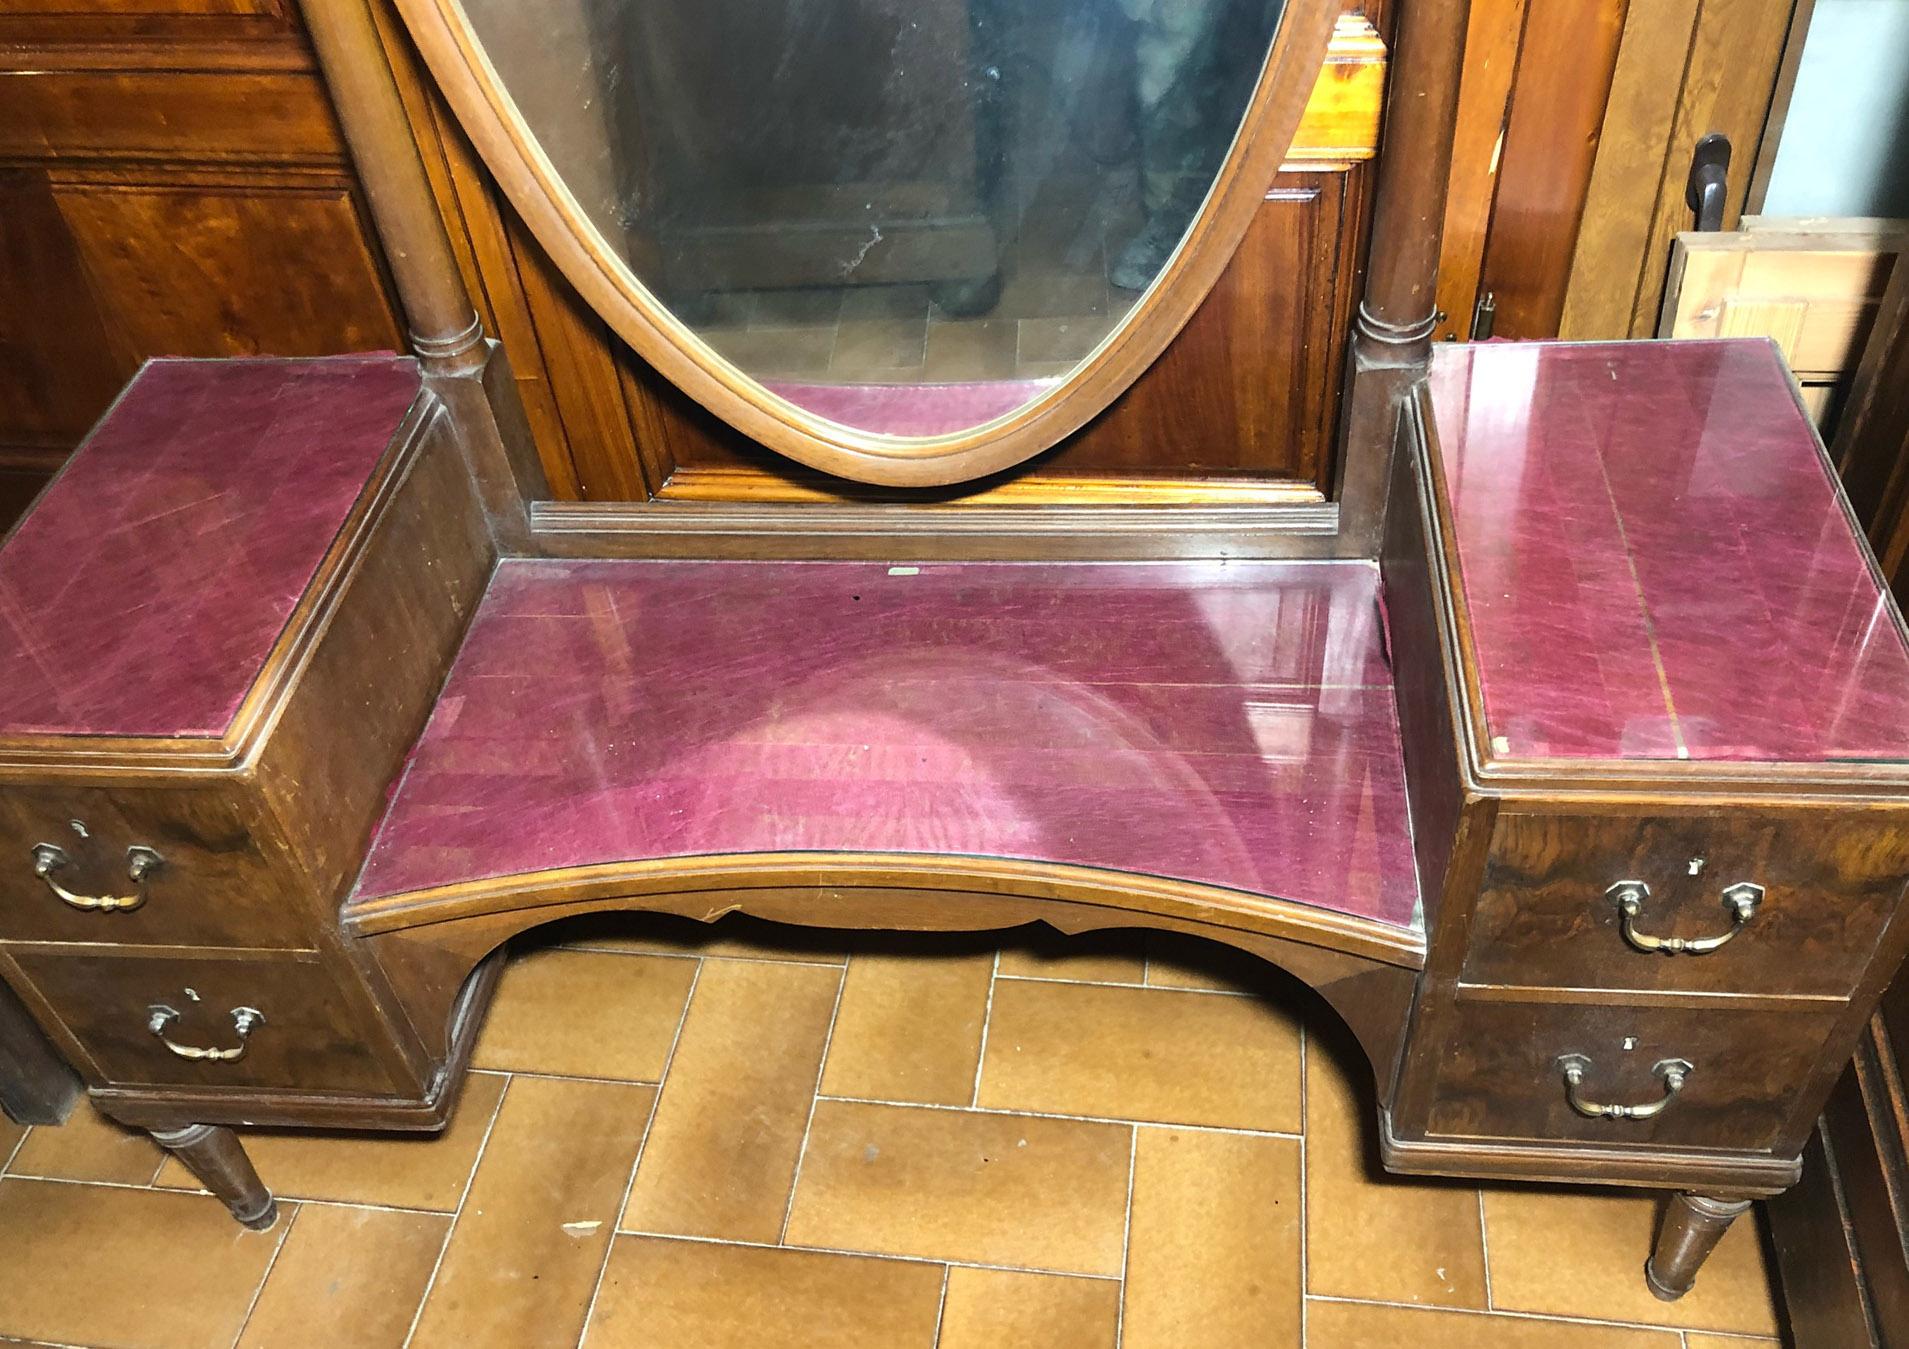 antique vanity with mirror